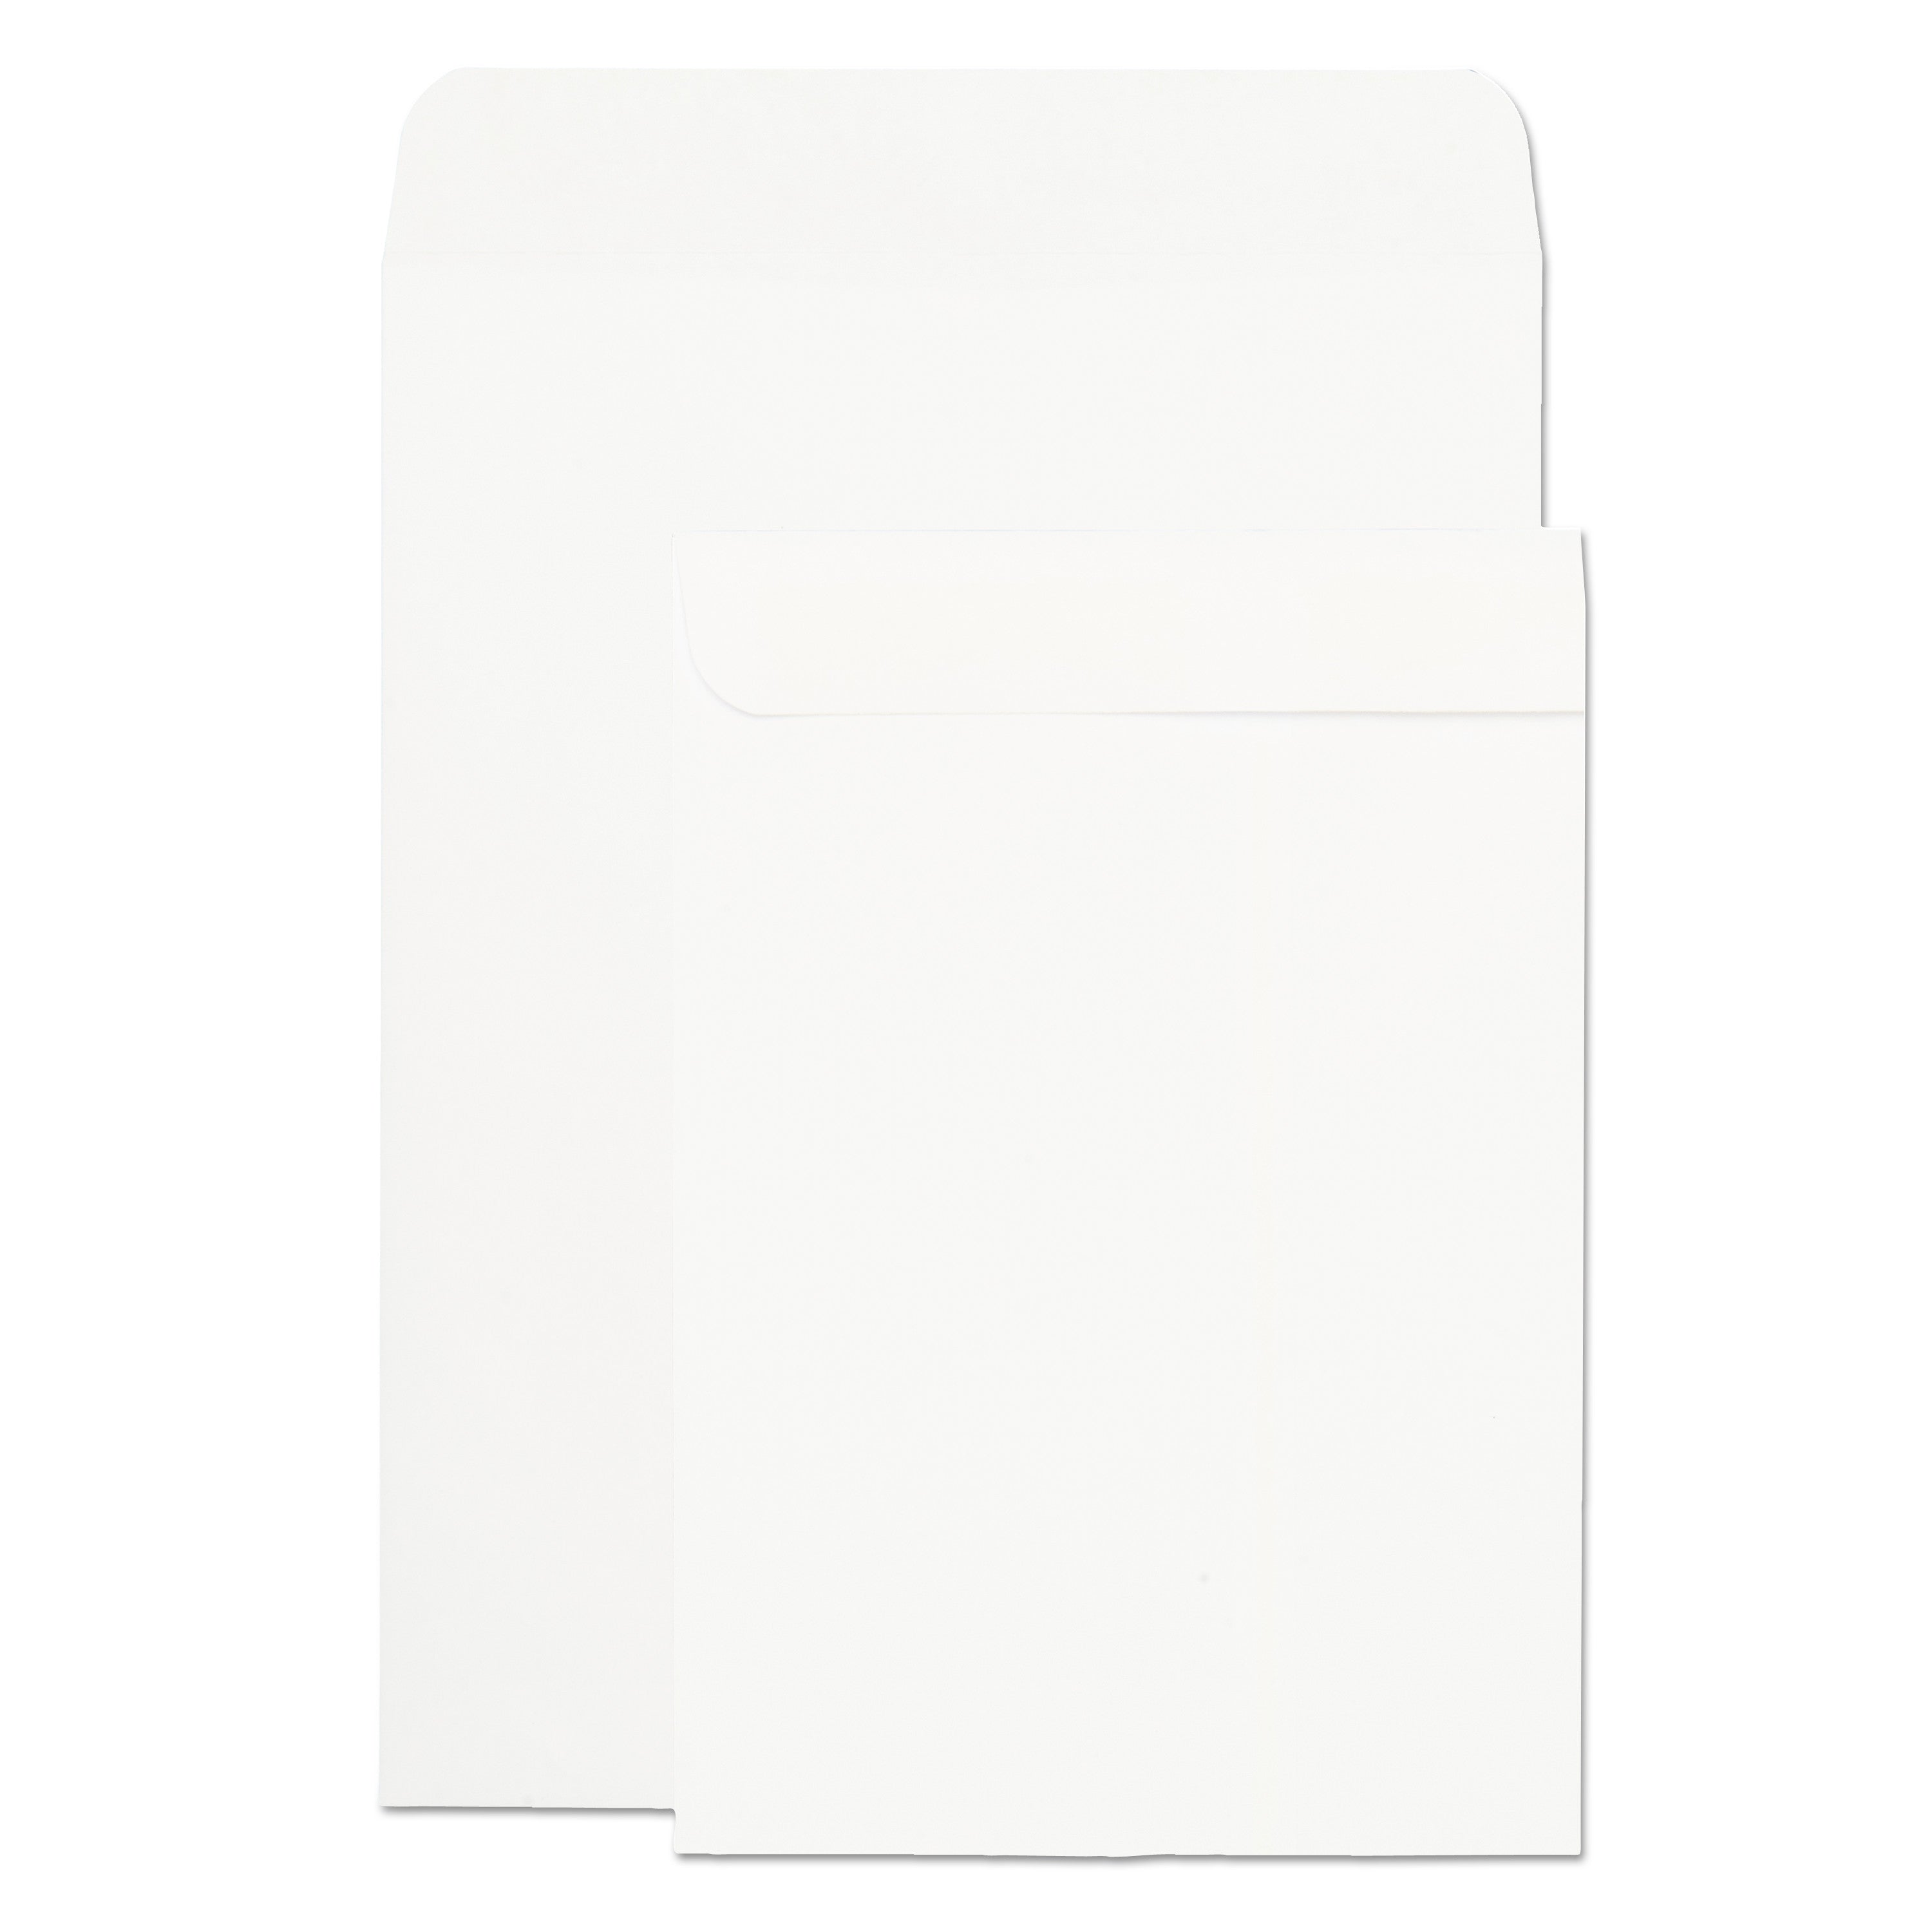 Catalog Envelope, 24 lb Bond Weight Paper, #10 1/2, Square Flap, Gummed Closure, 9 x 12, White, 250/Box - 